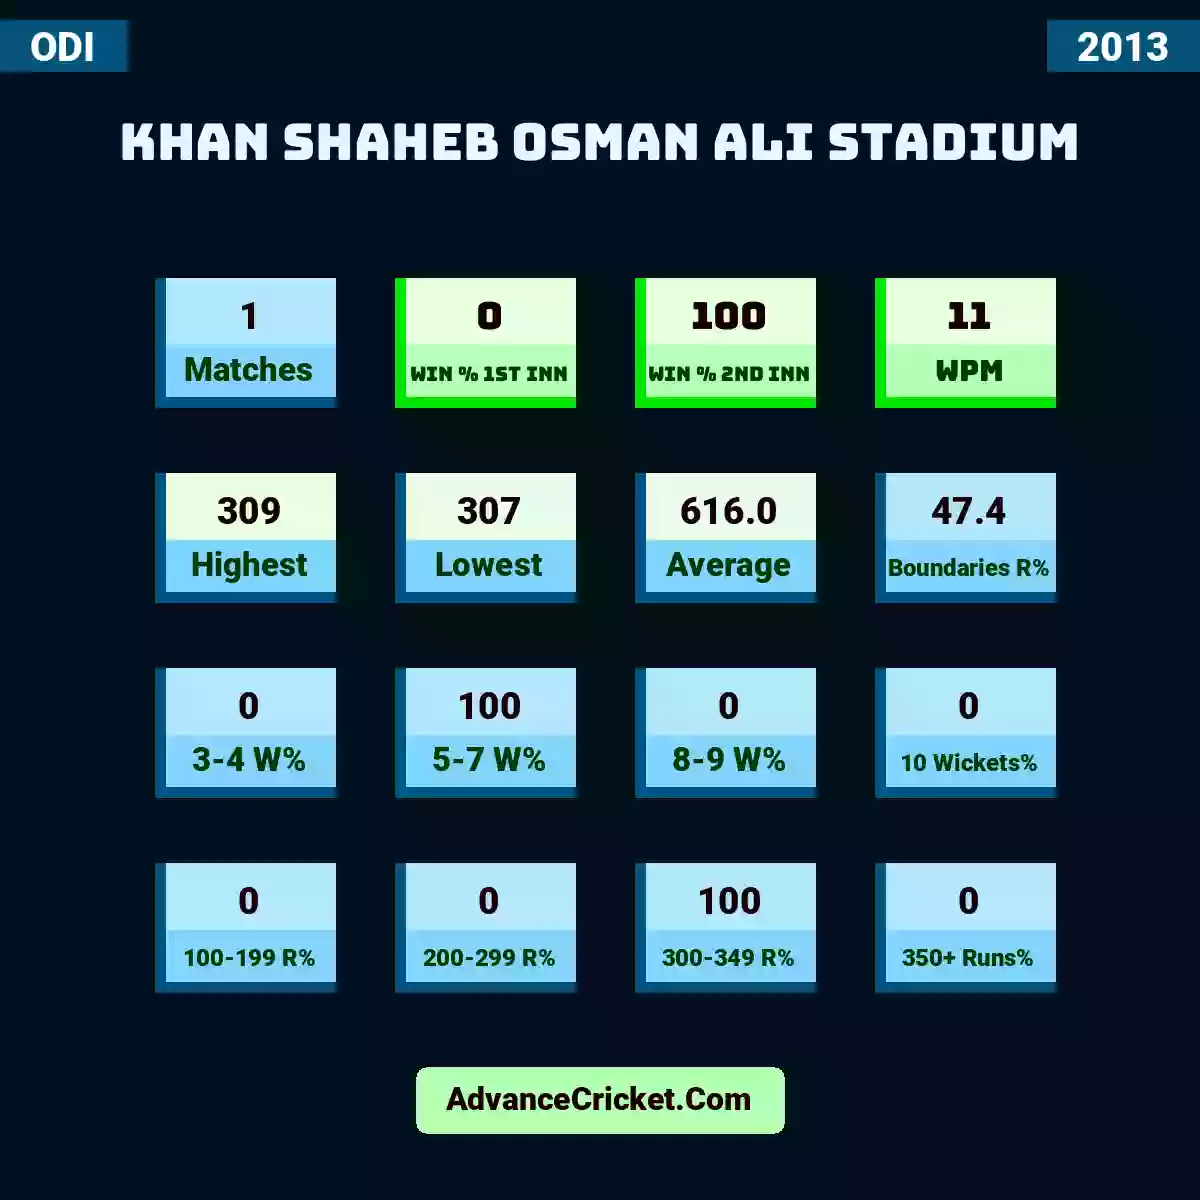 Image showing Khan Shaheb Osman Ali Stadium with Matches: 1, Win % 1st Inn: 0, Win % 2nd Inn: 100, WPM: 11, Highest: 309, Lowest: 307, Average: 616.0, Boundaries R%: 47.4, 3-4 W%: 0, 5-7 W%: 100, 8-9 W%: 0, 10 Wickets%: 0, 100-199 R%: 0, 200-299 R%: 0, 300-349 R%: 100, 350+ Runs%: 0.